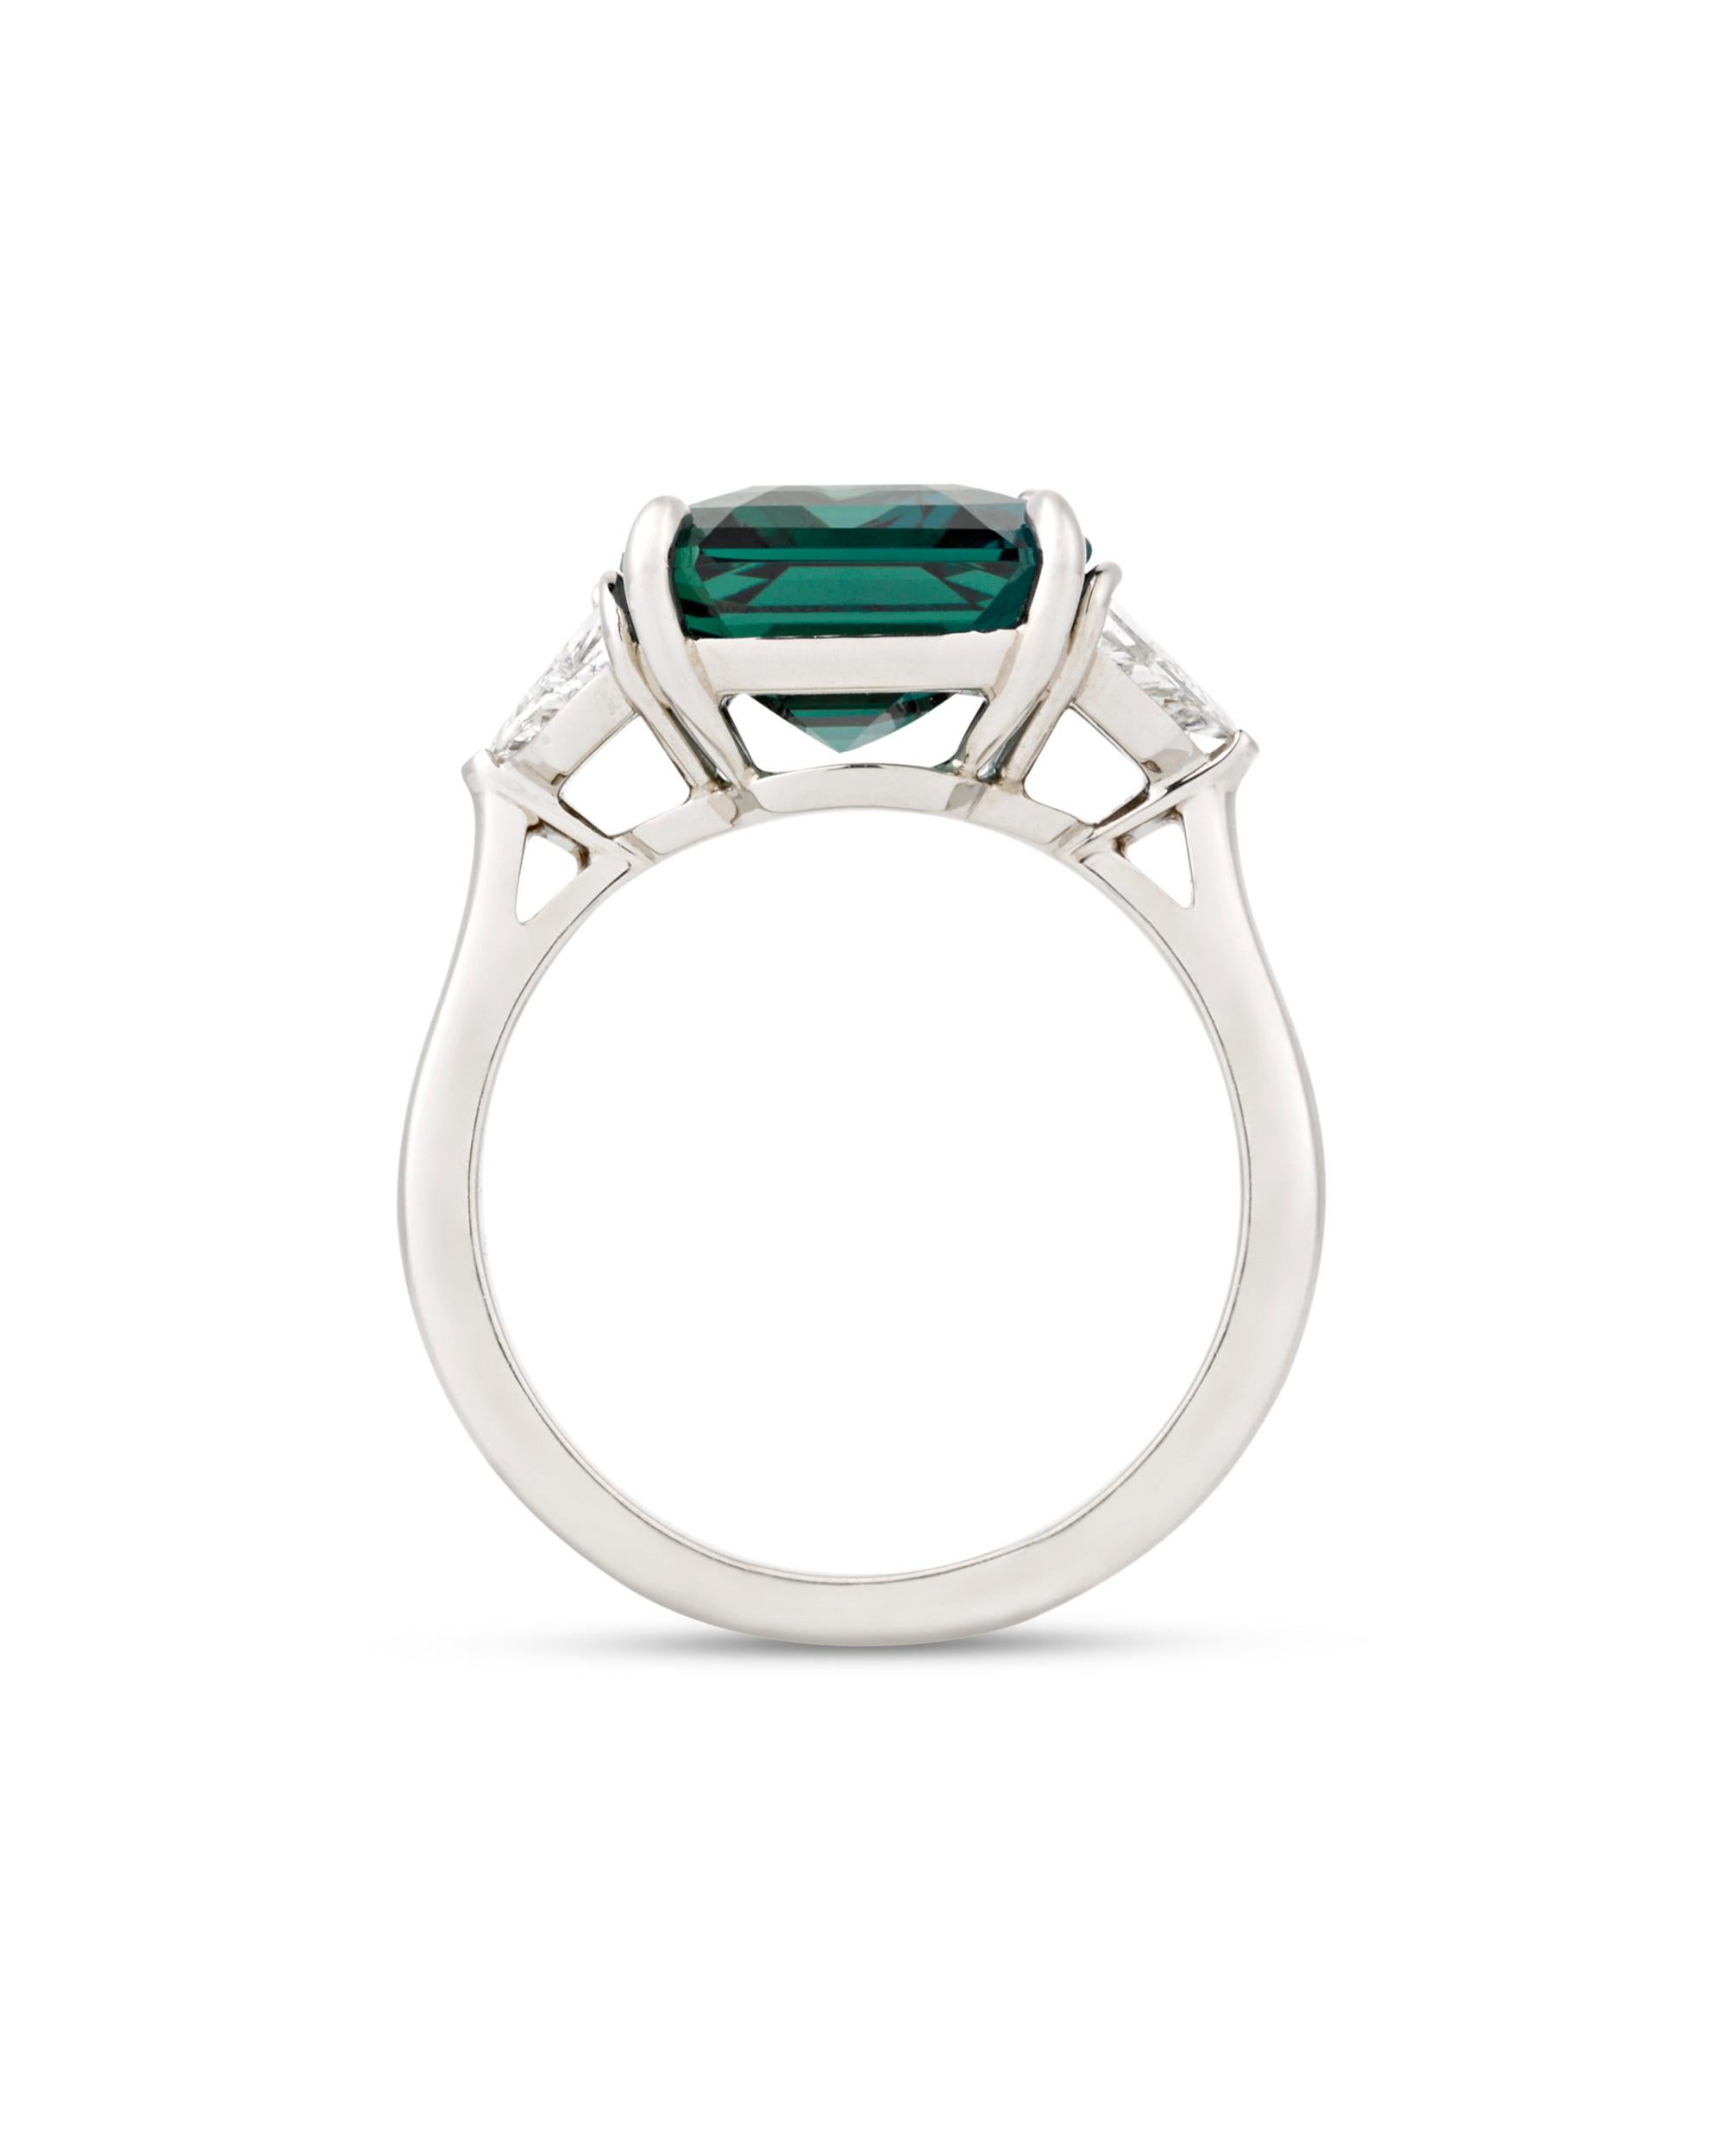 Modern Untreated Bluish-Green Sapphire Ring, 8.03 Carats